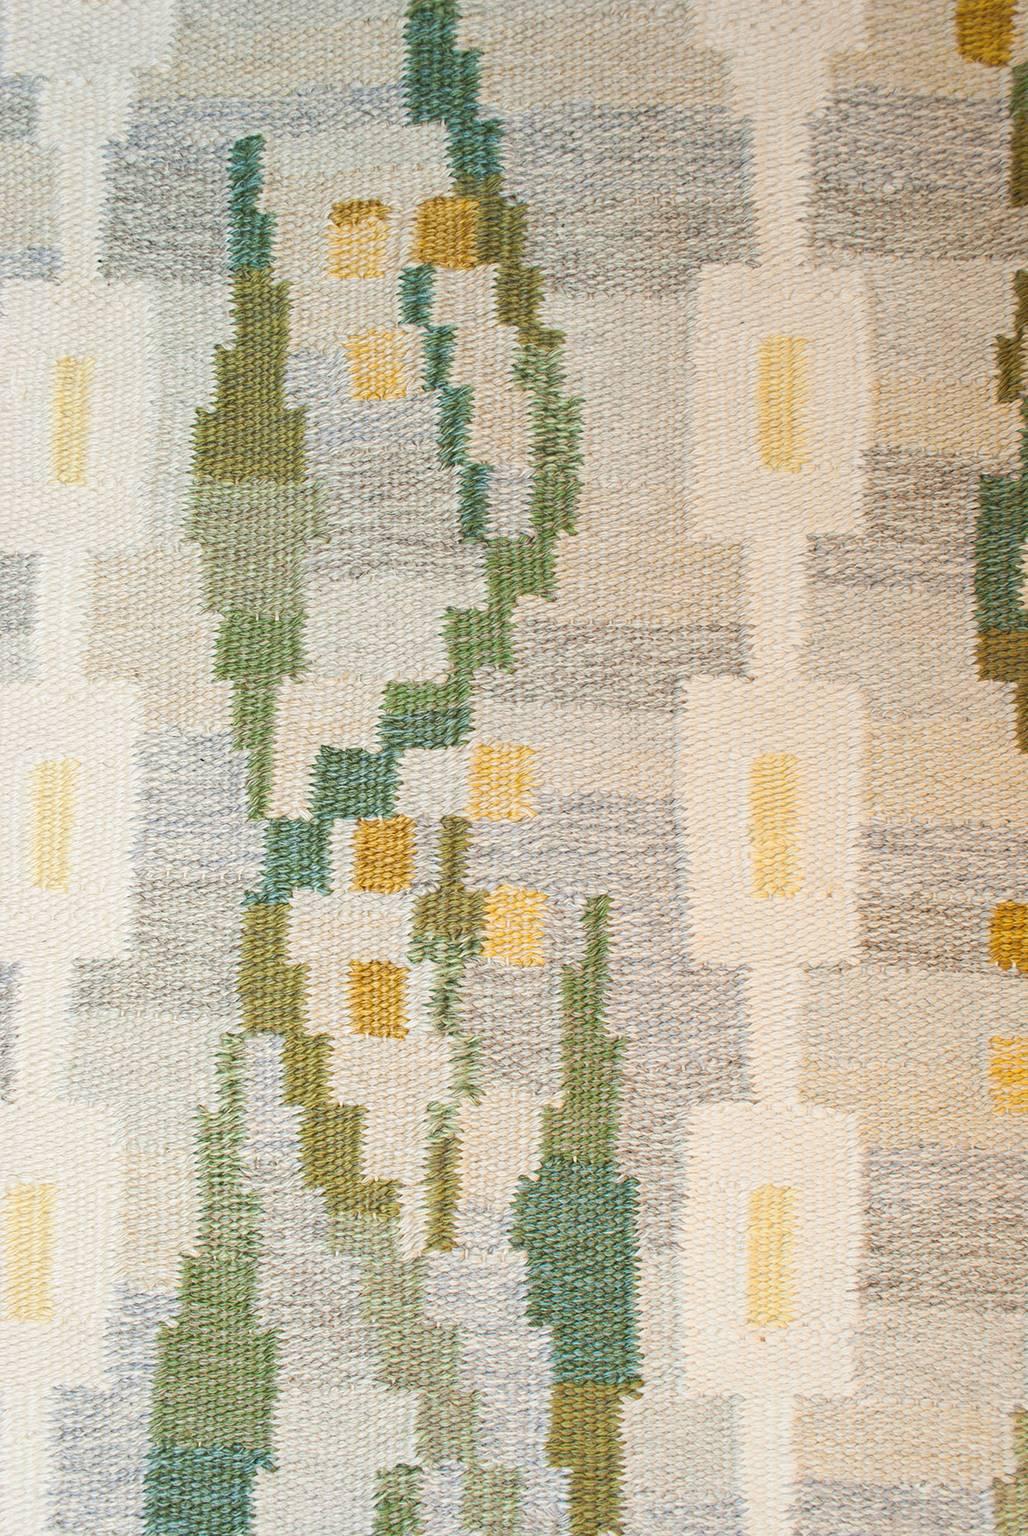 Woven Scandinavian Modern Wool Flat-Weave Rug with Yellow Flowers on Heathered Ground